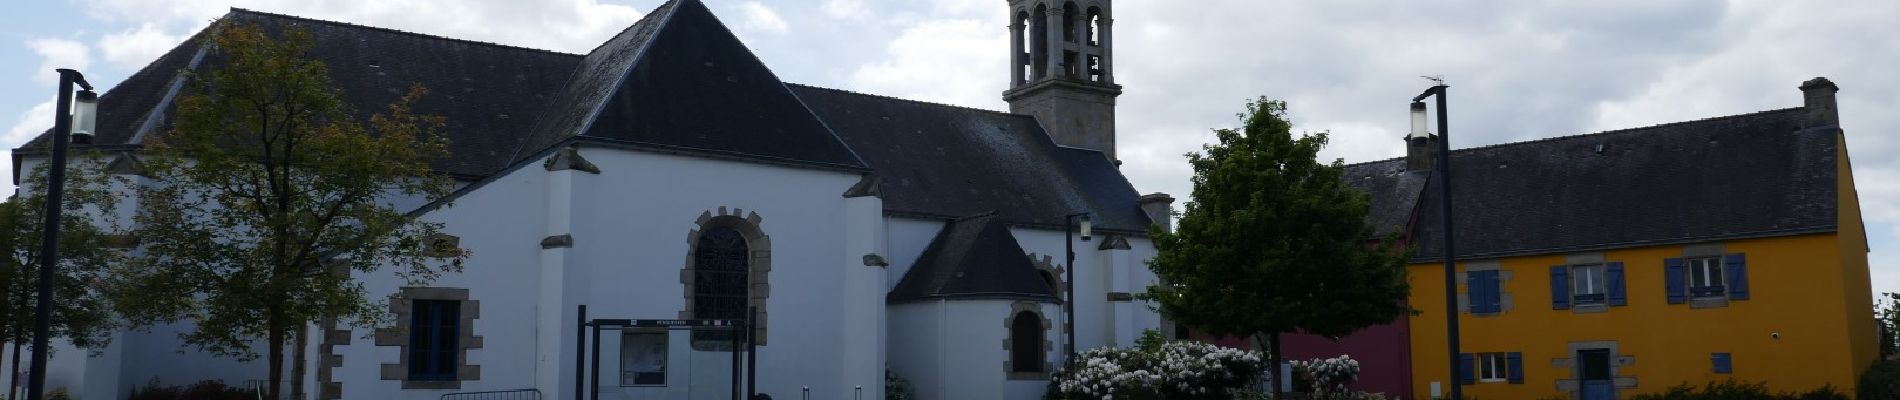 Point d'intérêt Inzinzac-Lochrist - Eglise de Penquesten - Photo